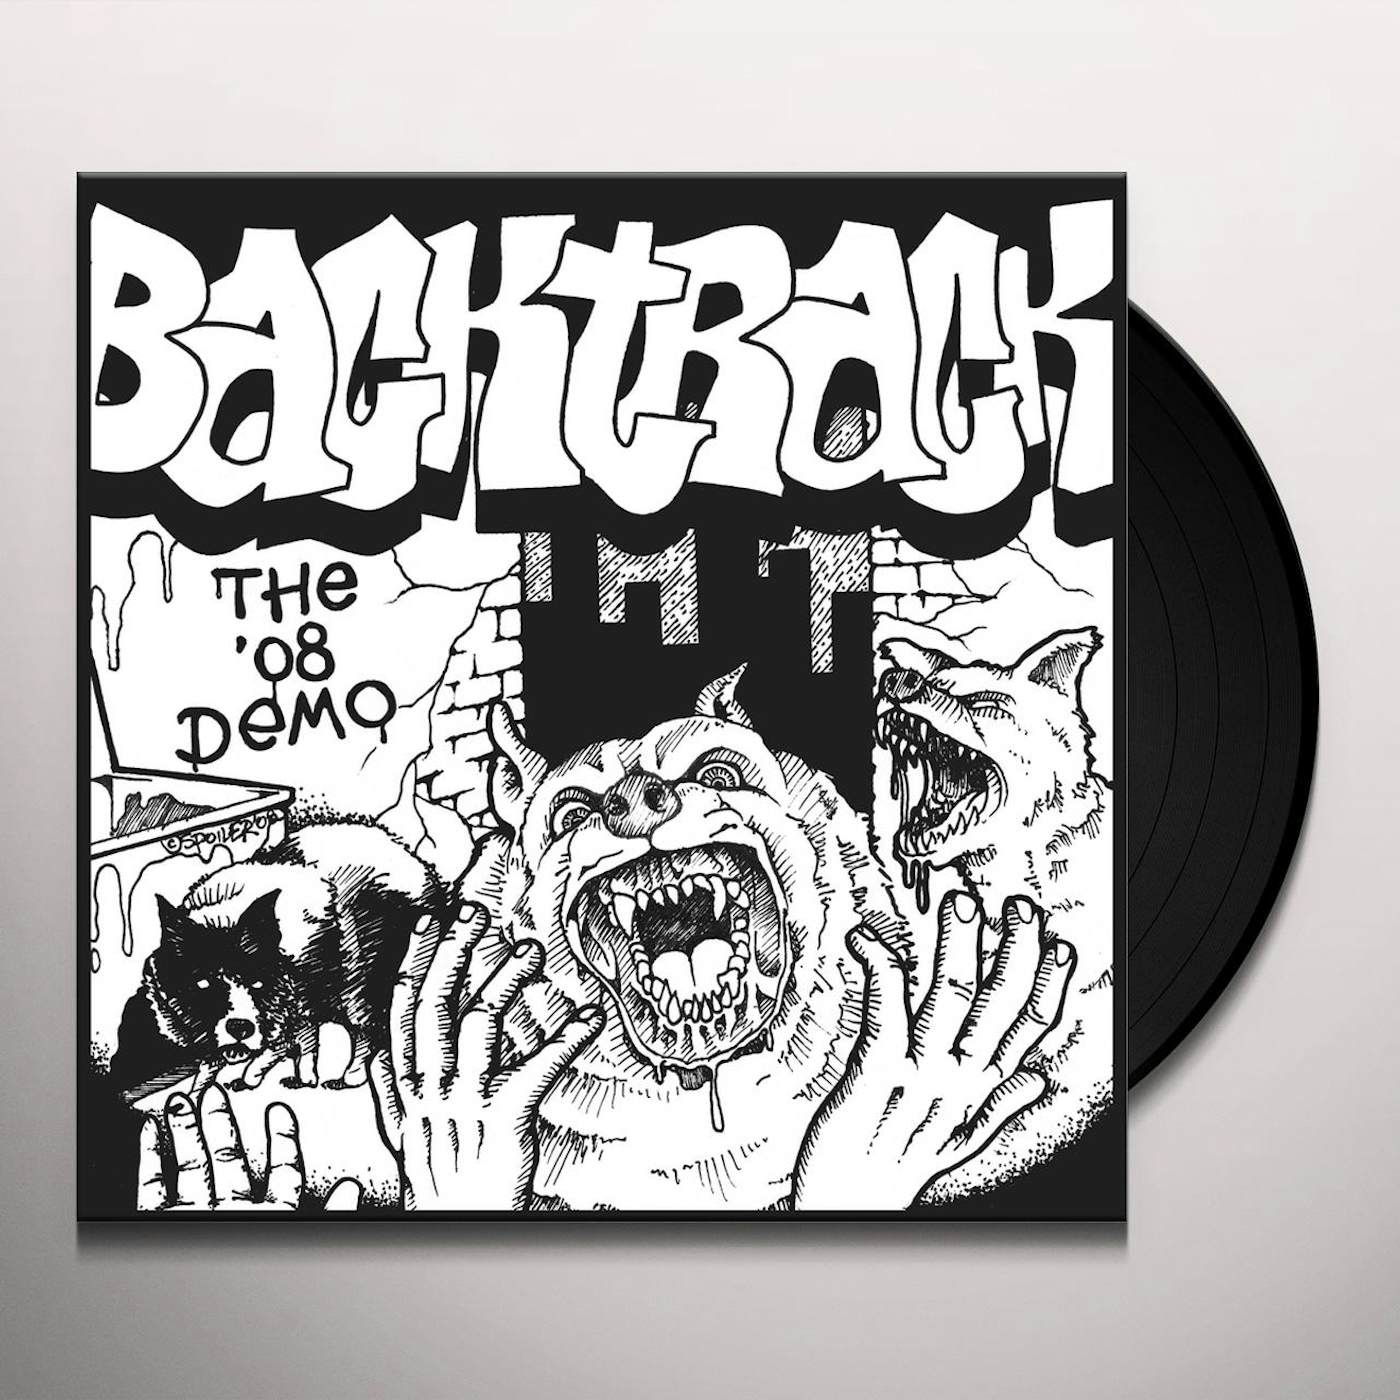 Backtrack 08 DEMO Vinyl Record